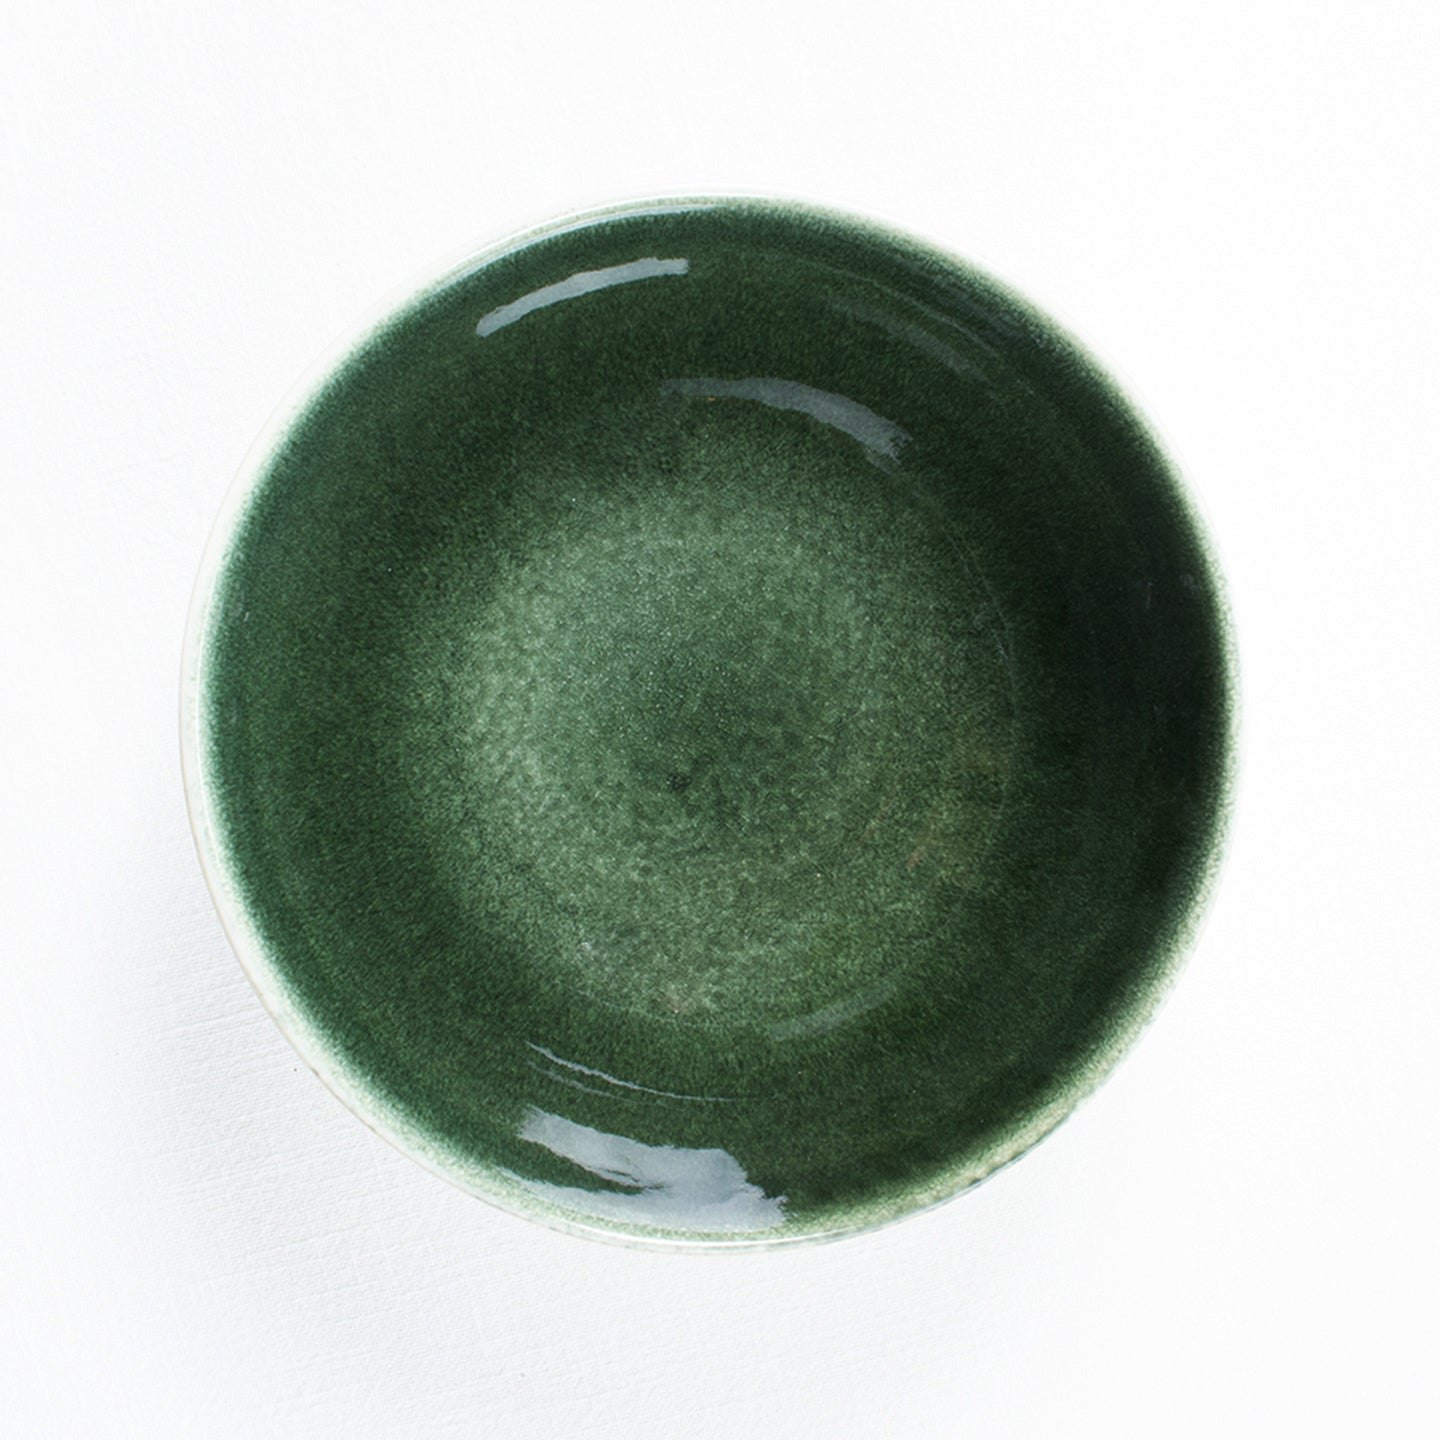 Jars Maguelone Bowl / 23cm / Orage